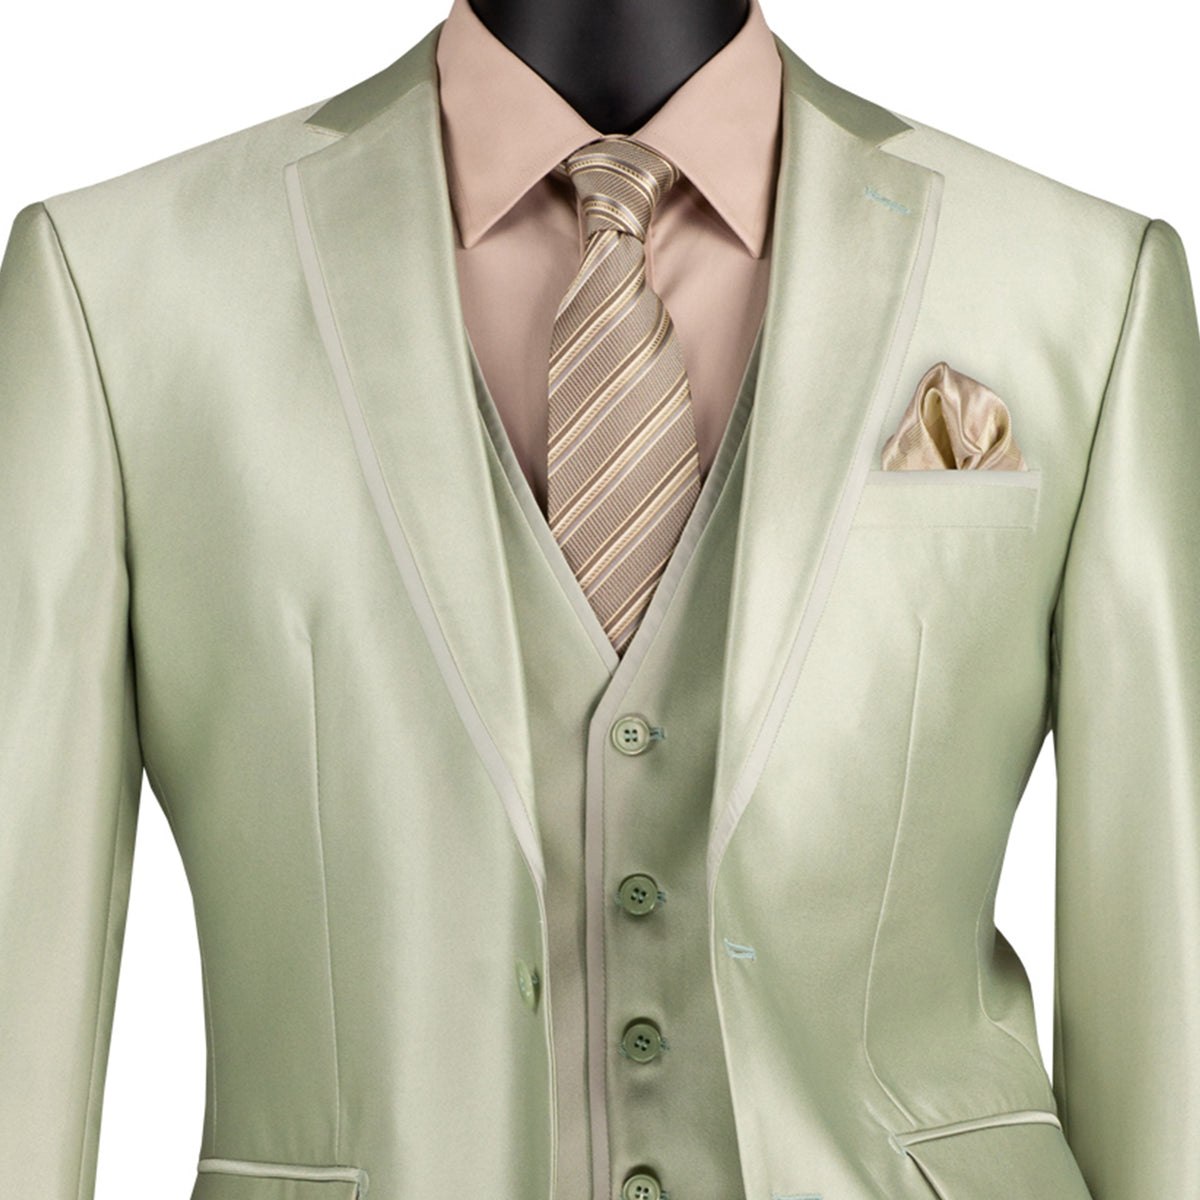 Satin 3-Piece 2-Button Slim-Fit Suit in Light Sage